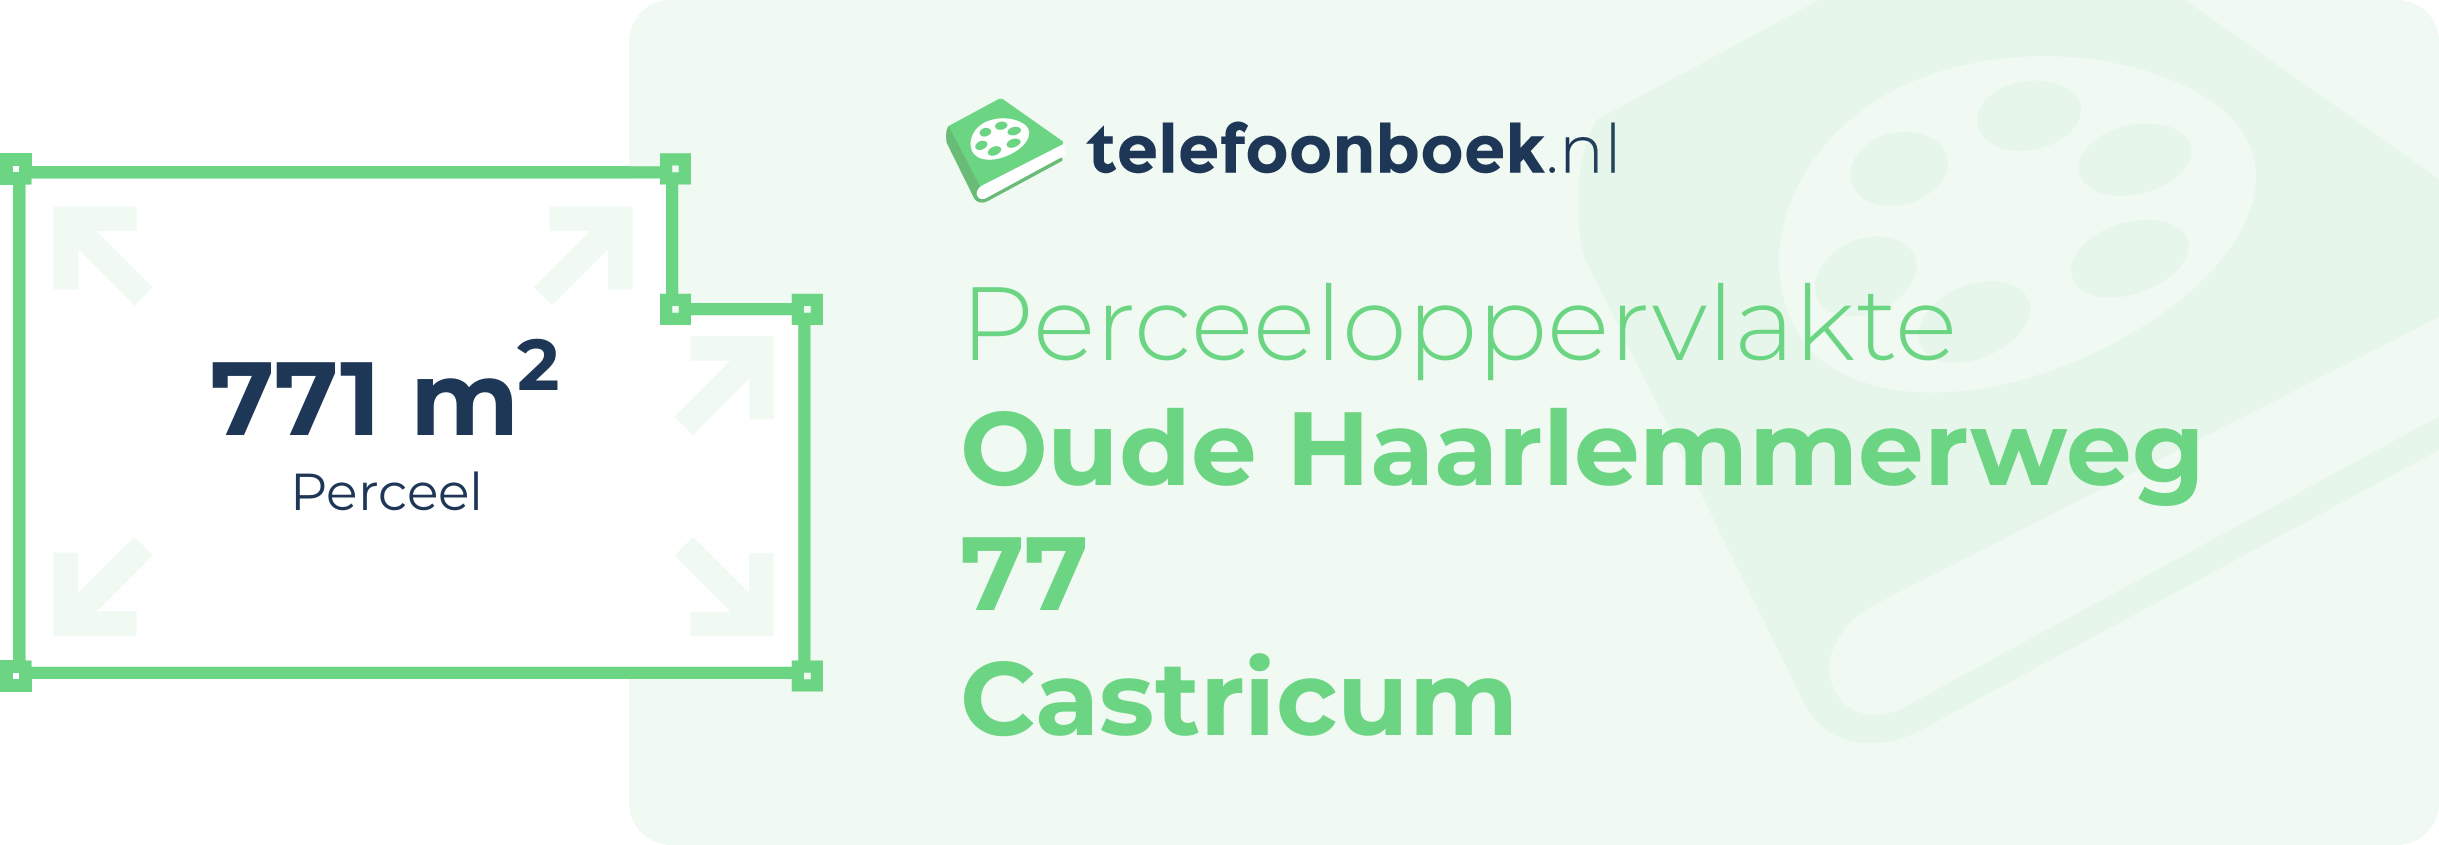 Perceeloppervlakte Oude Haarlemmerweg 77 Castricum